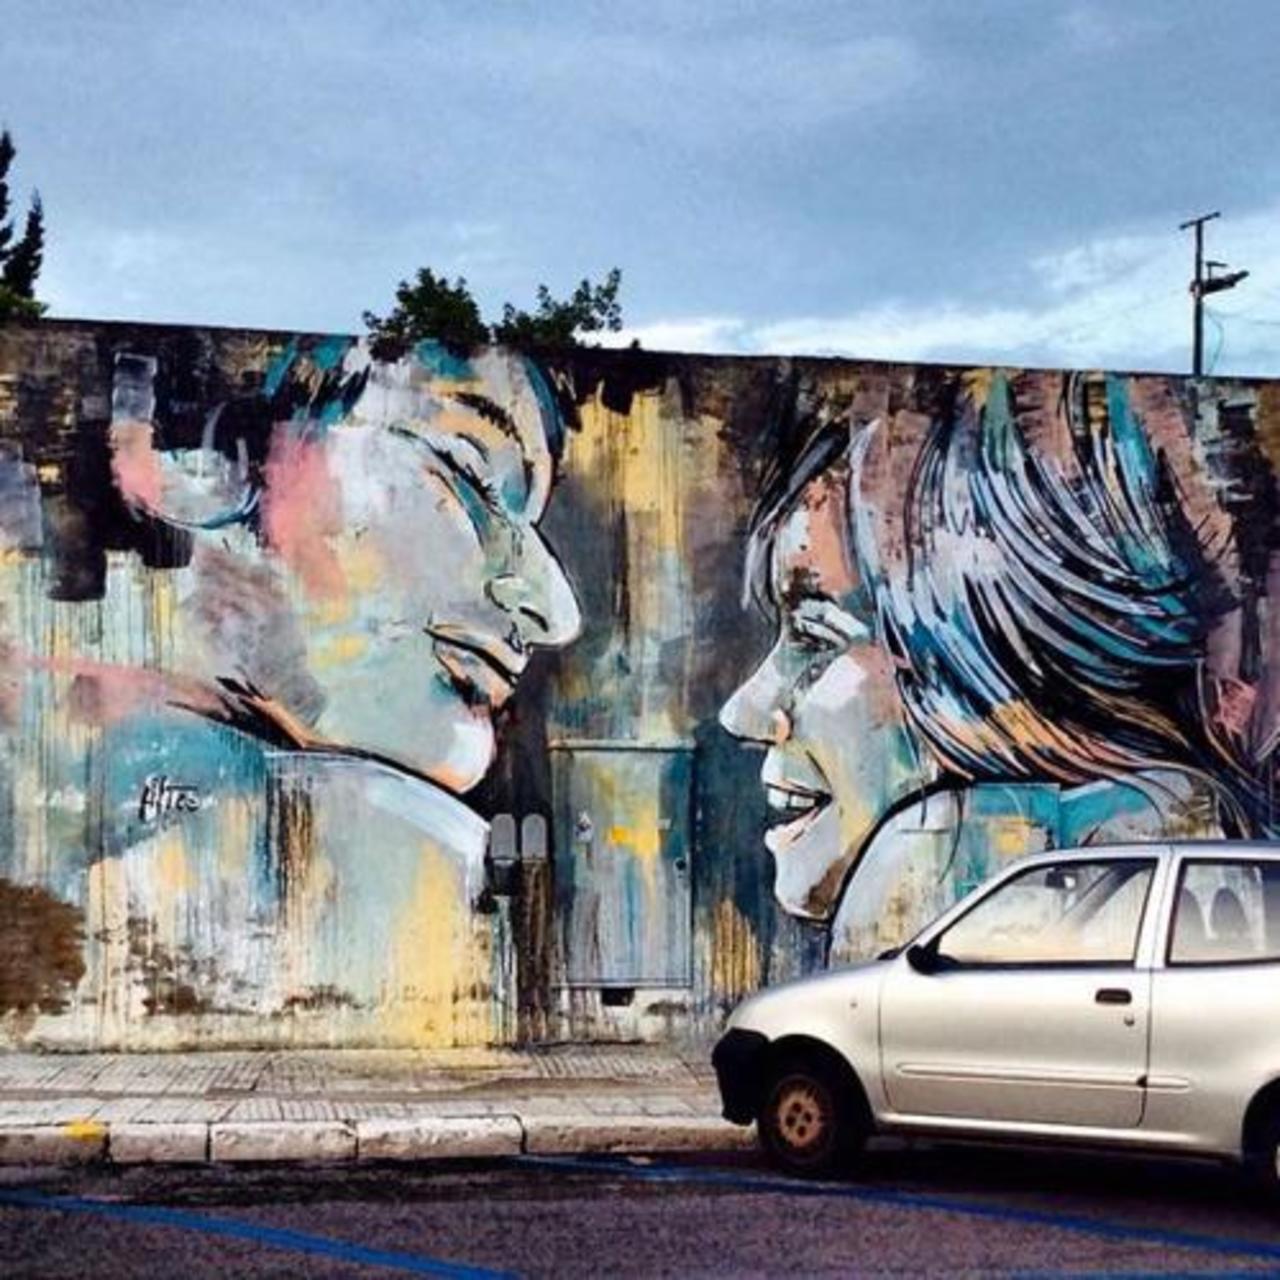 Alice Pasquini #graffiti #streetart #gaeta #memorieurbane... http://ift.tt/1Jxcan4 #alicepasquini http://t.co/zrlPIsqPvT